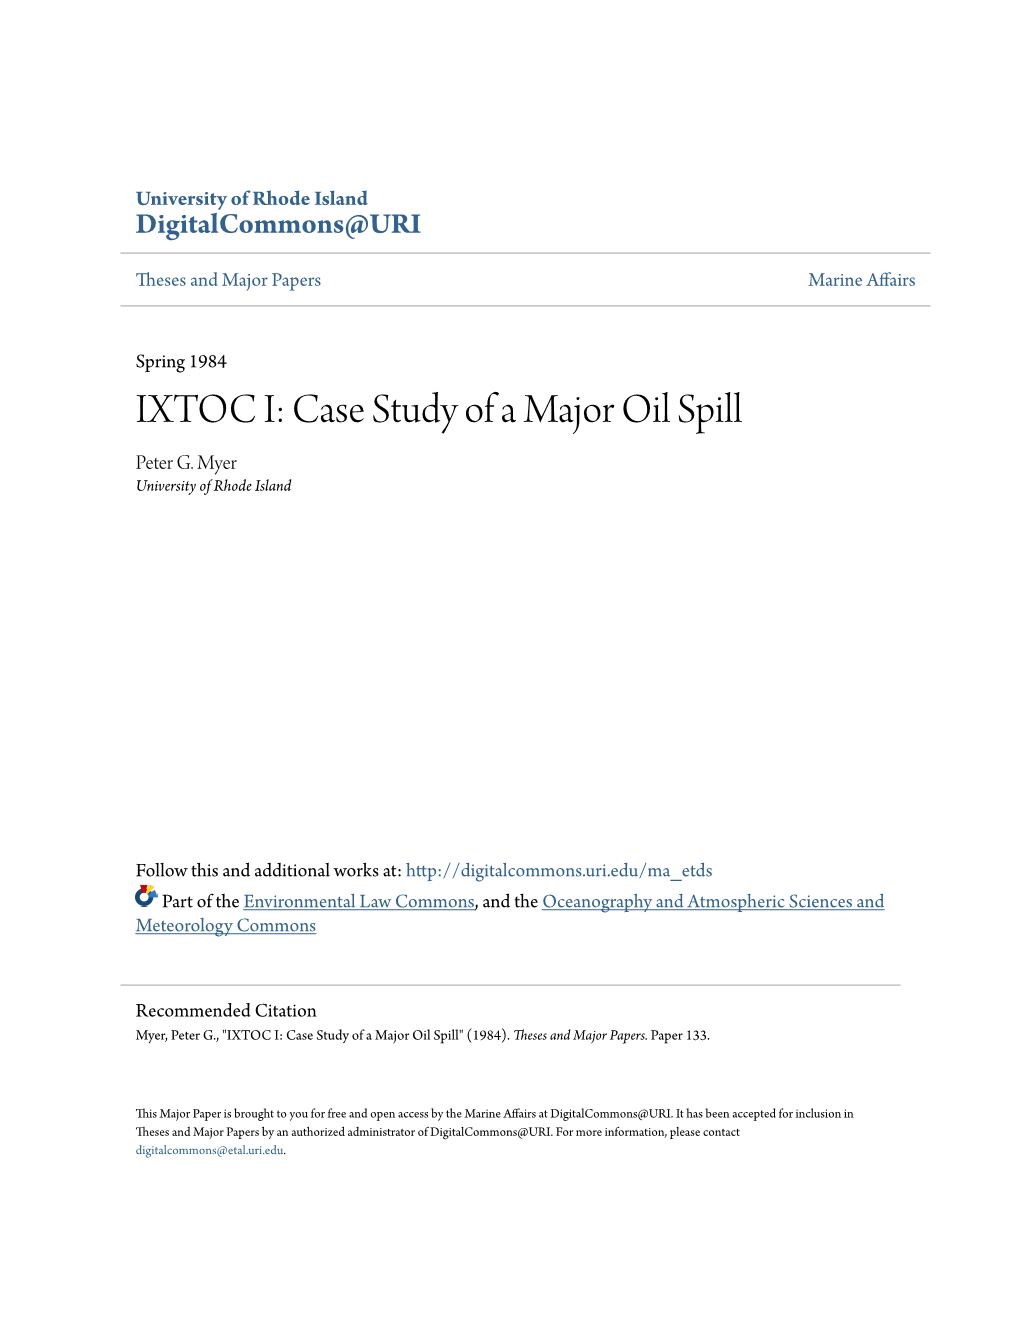 IXTOC I: Case Study of a Major Oil Spill Peter G